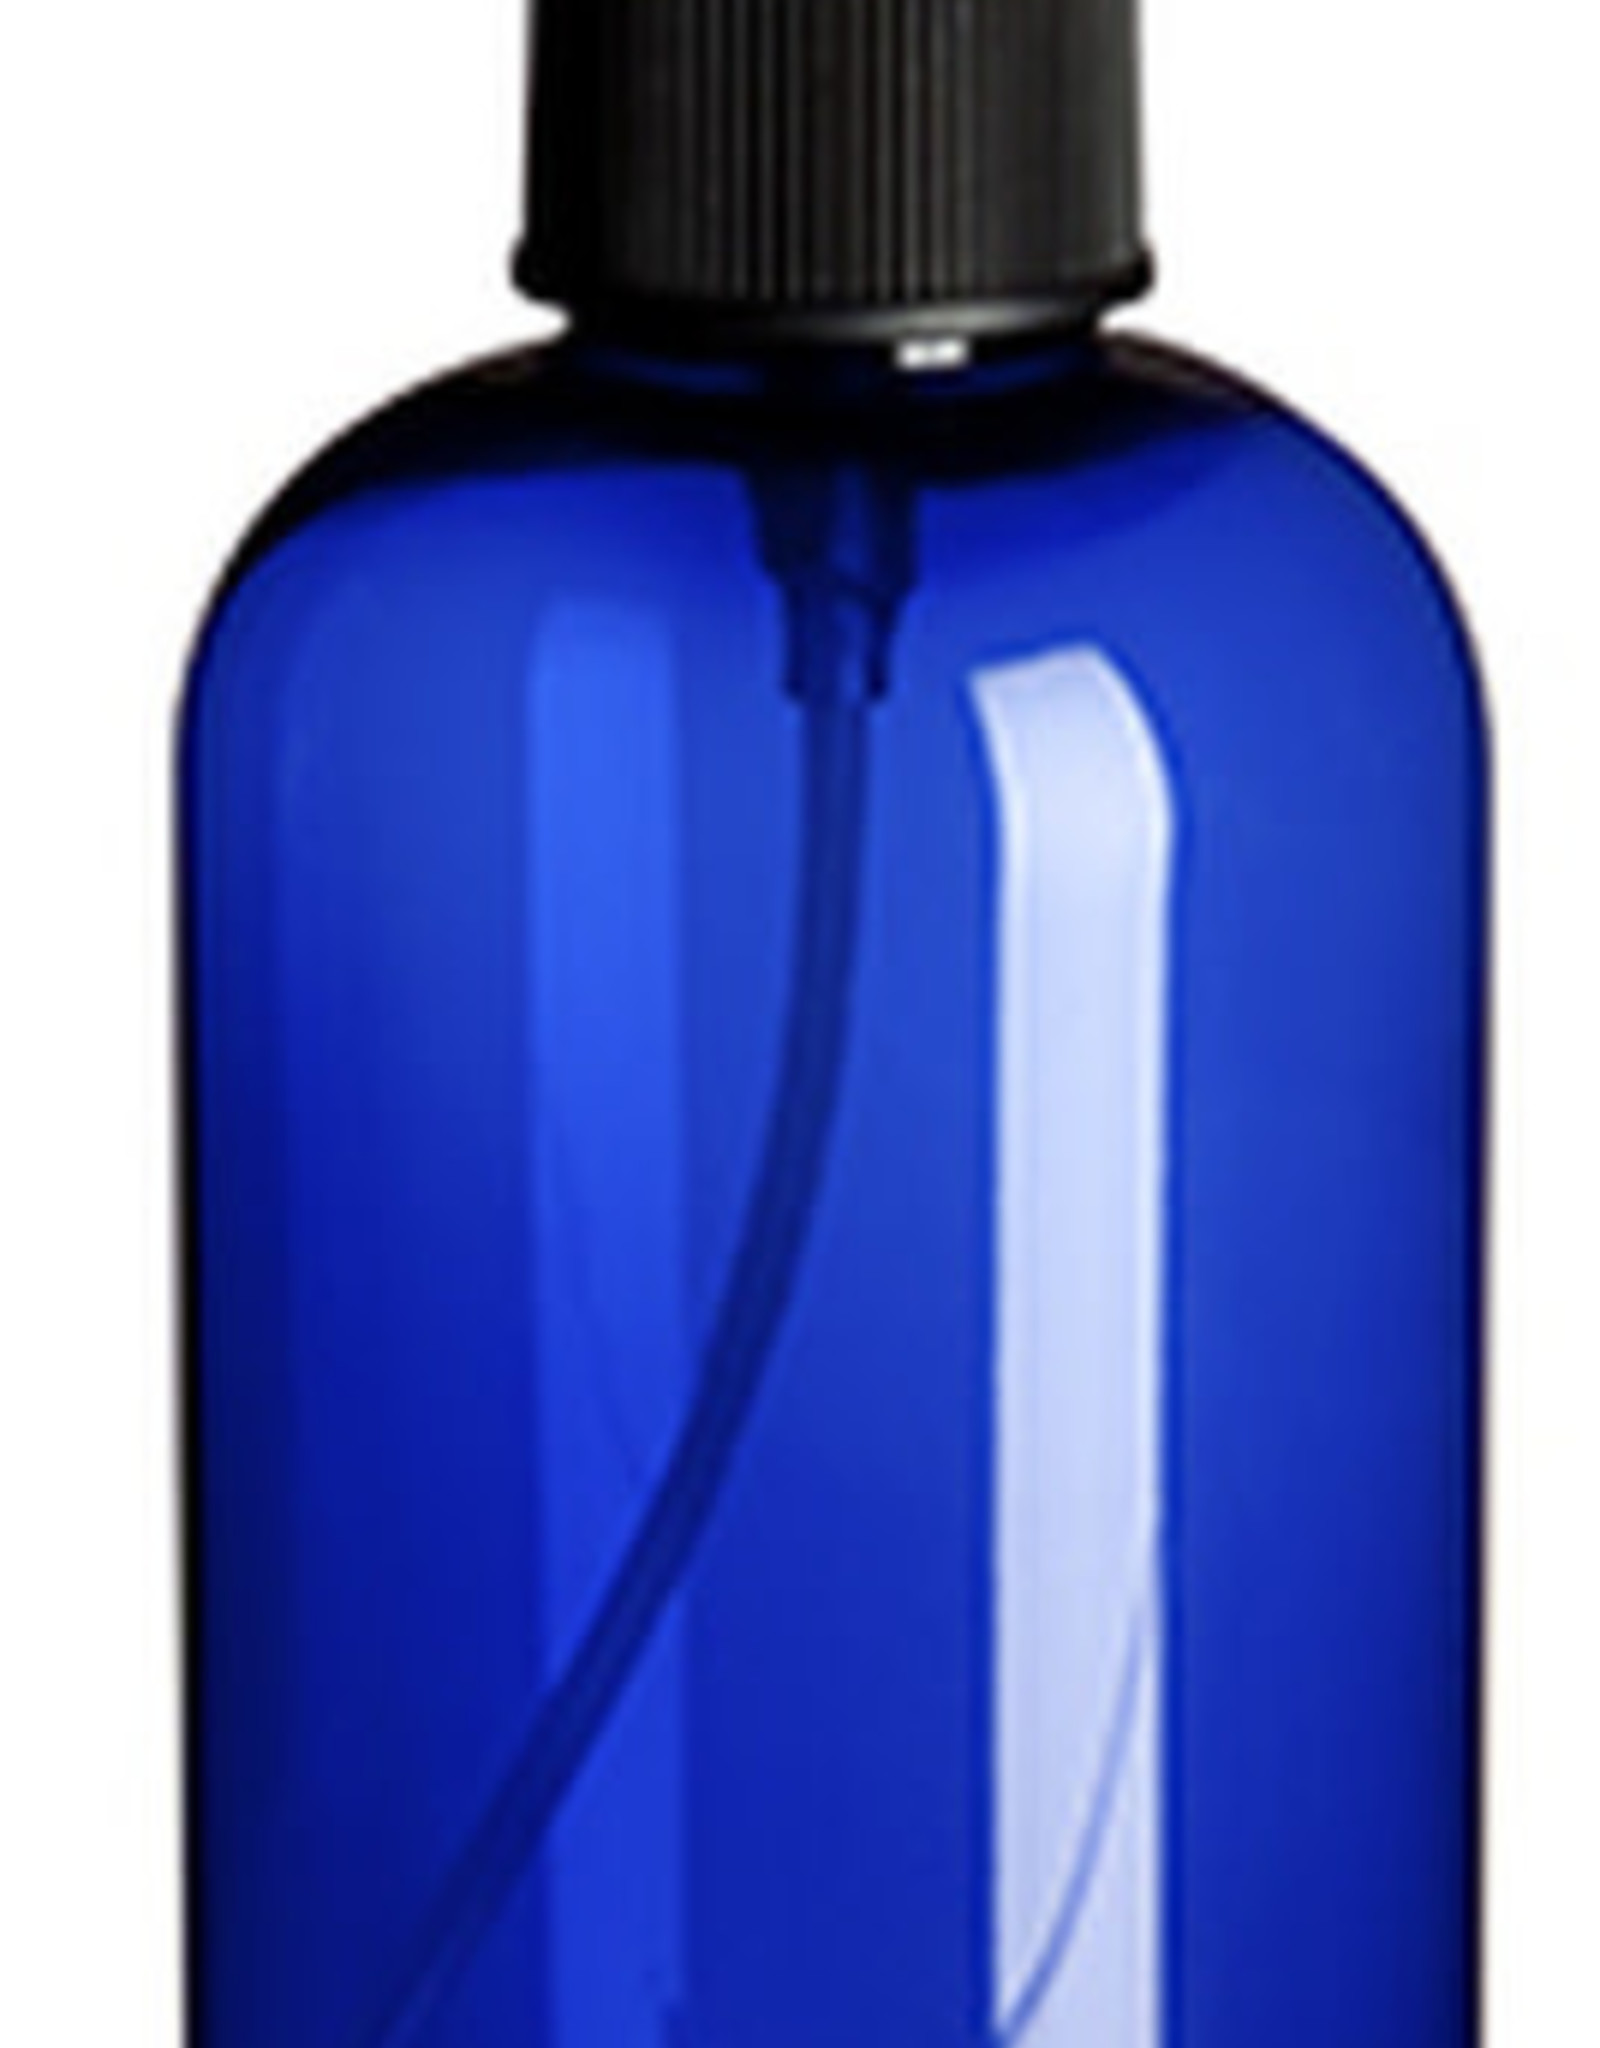 Nature's Sunshine Lavender Essential Oil - 8oz spray